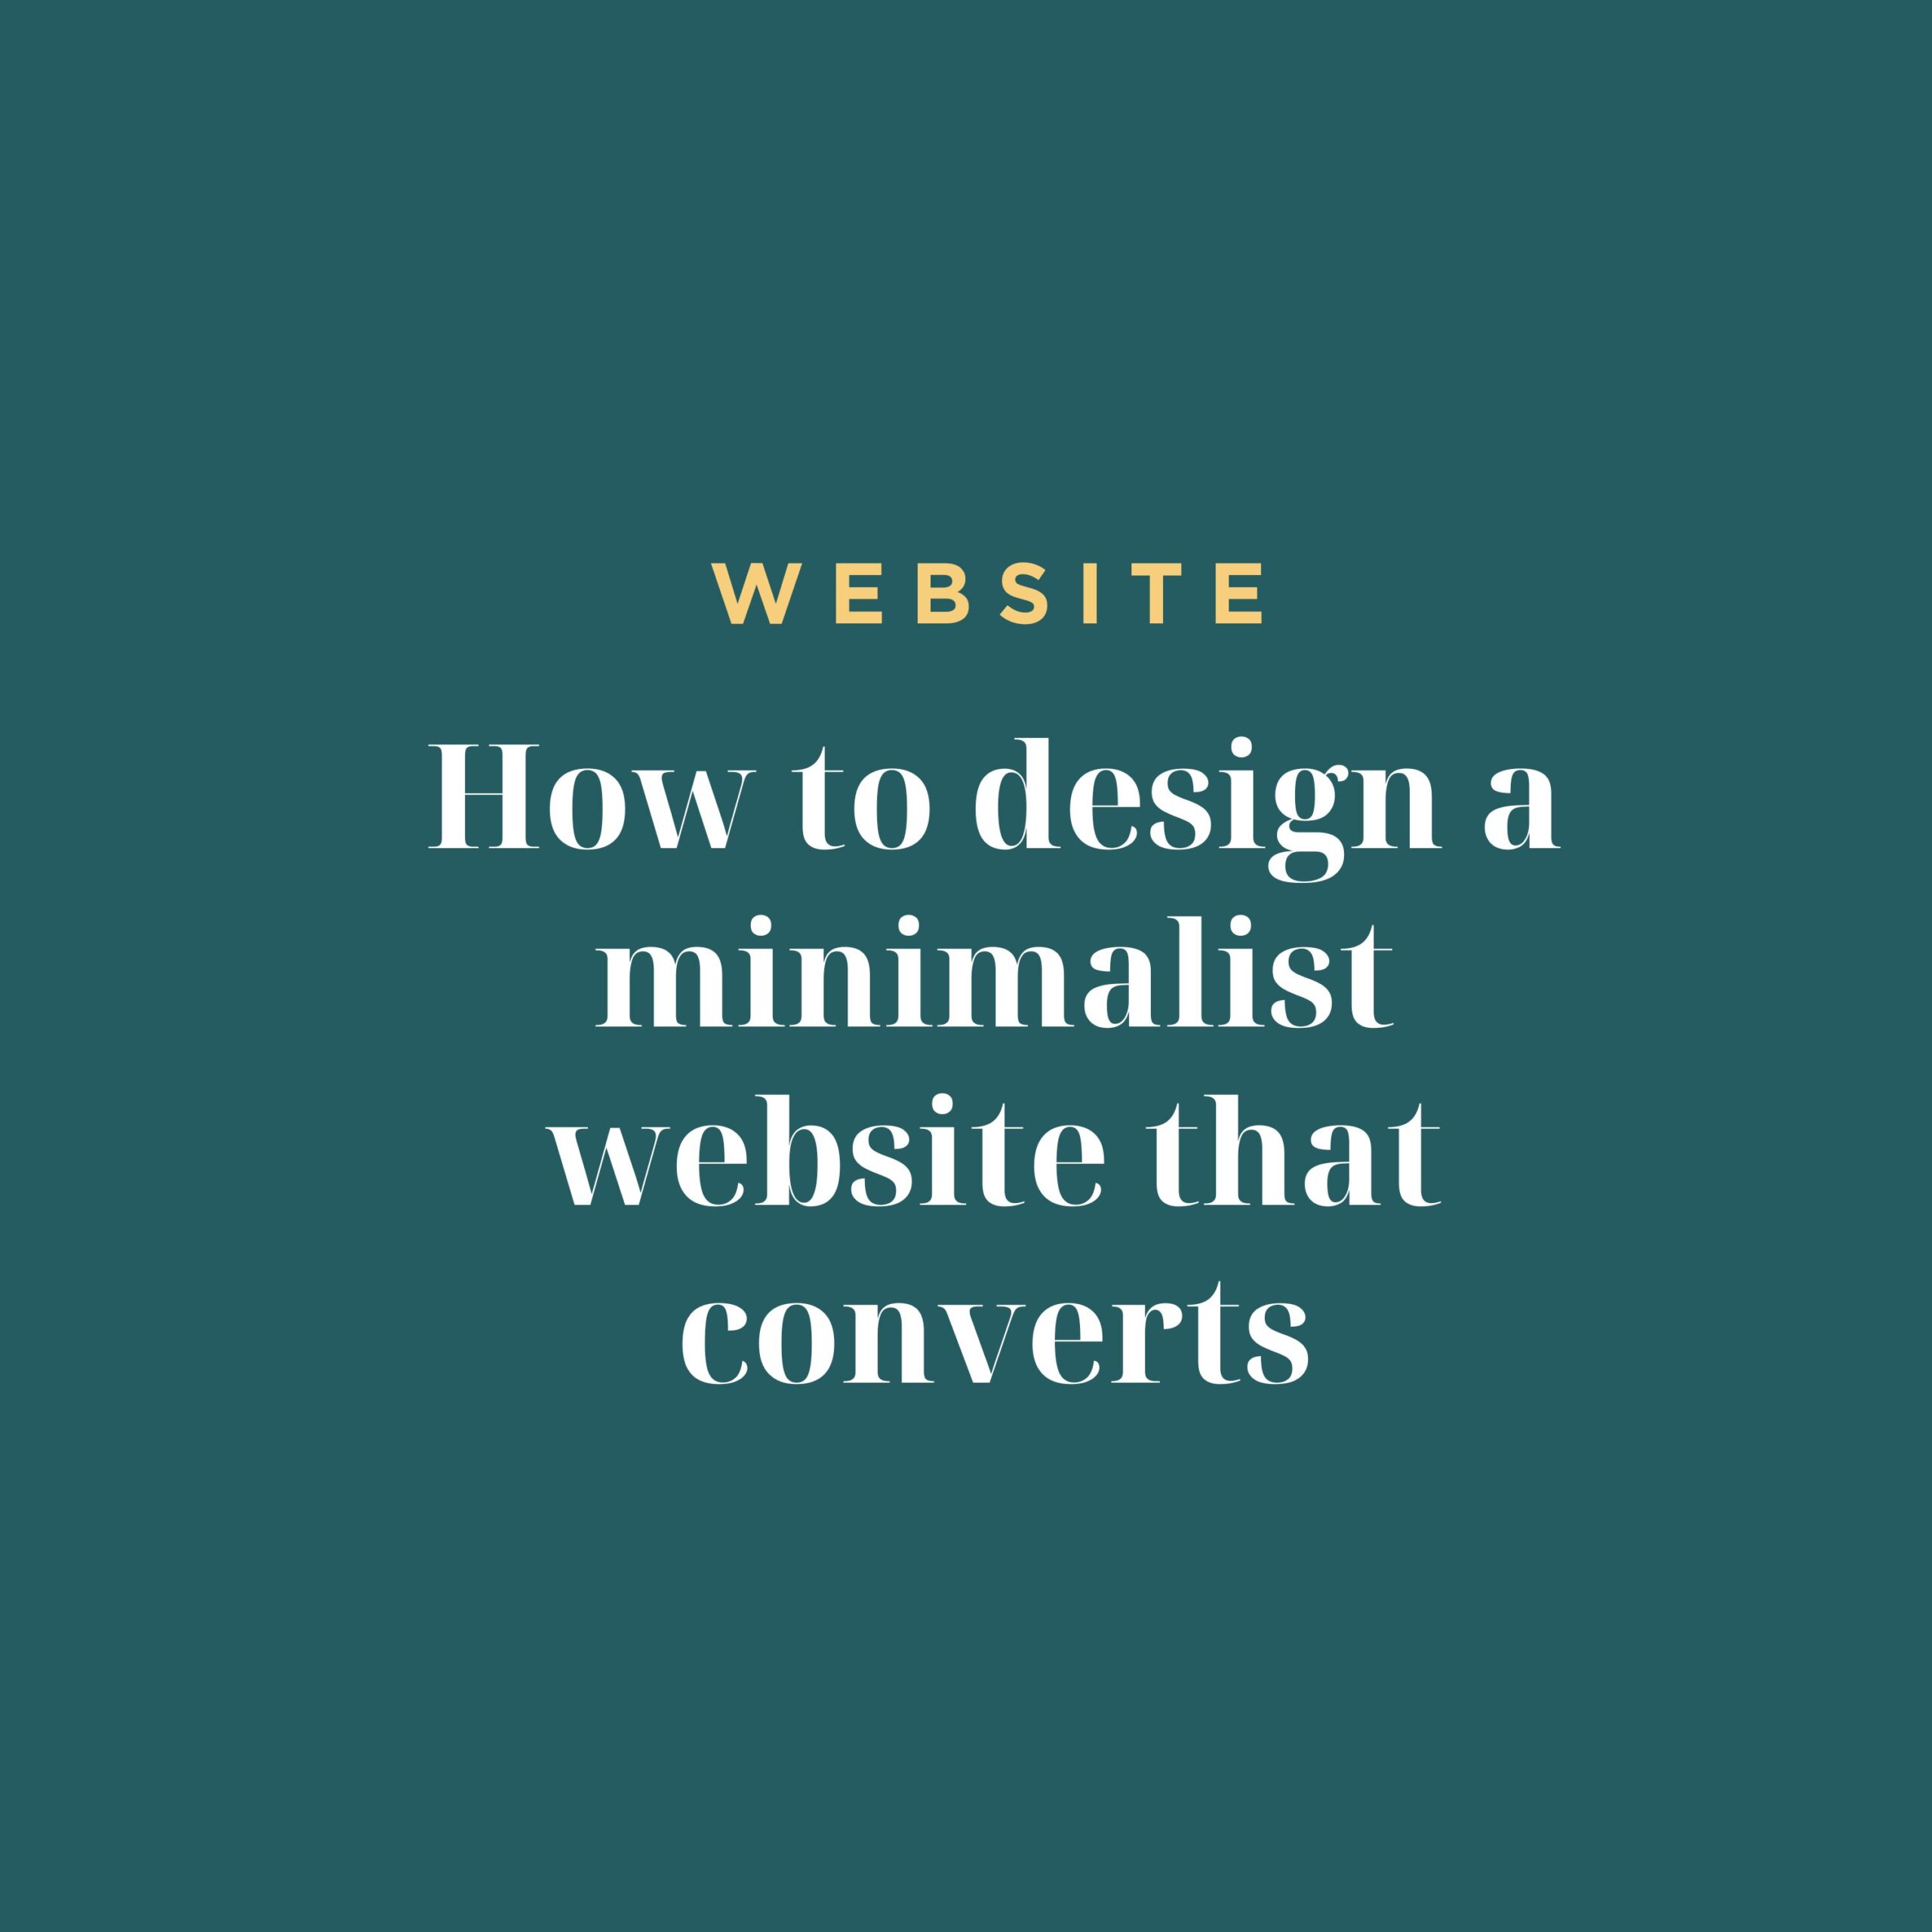 design a minimalist website for starting an online business